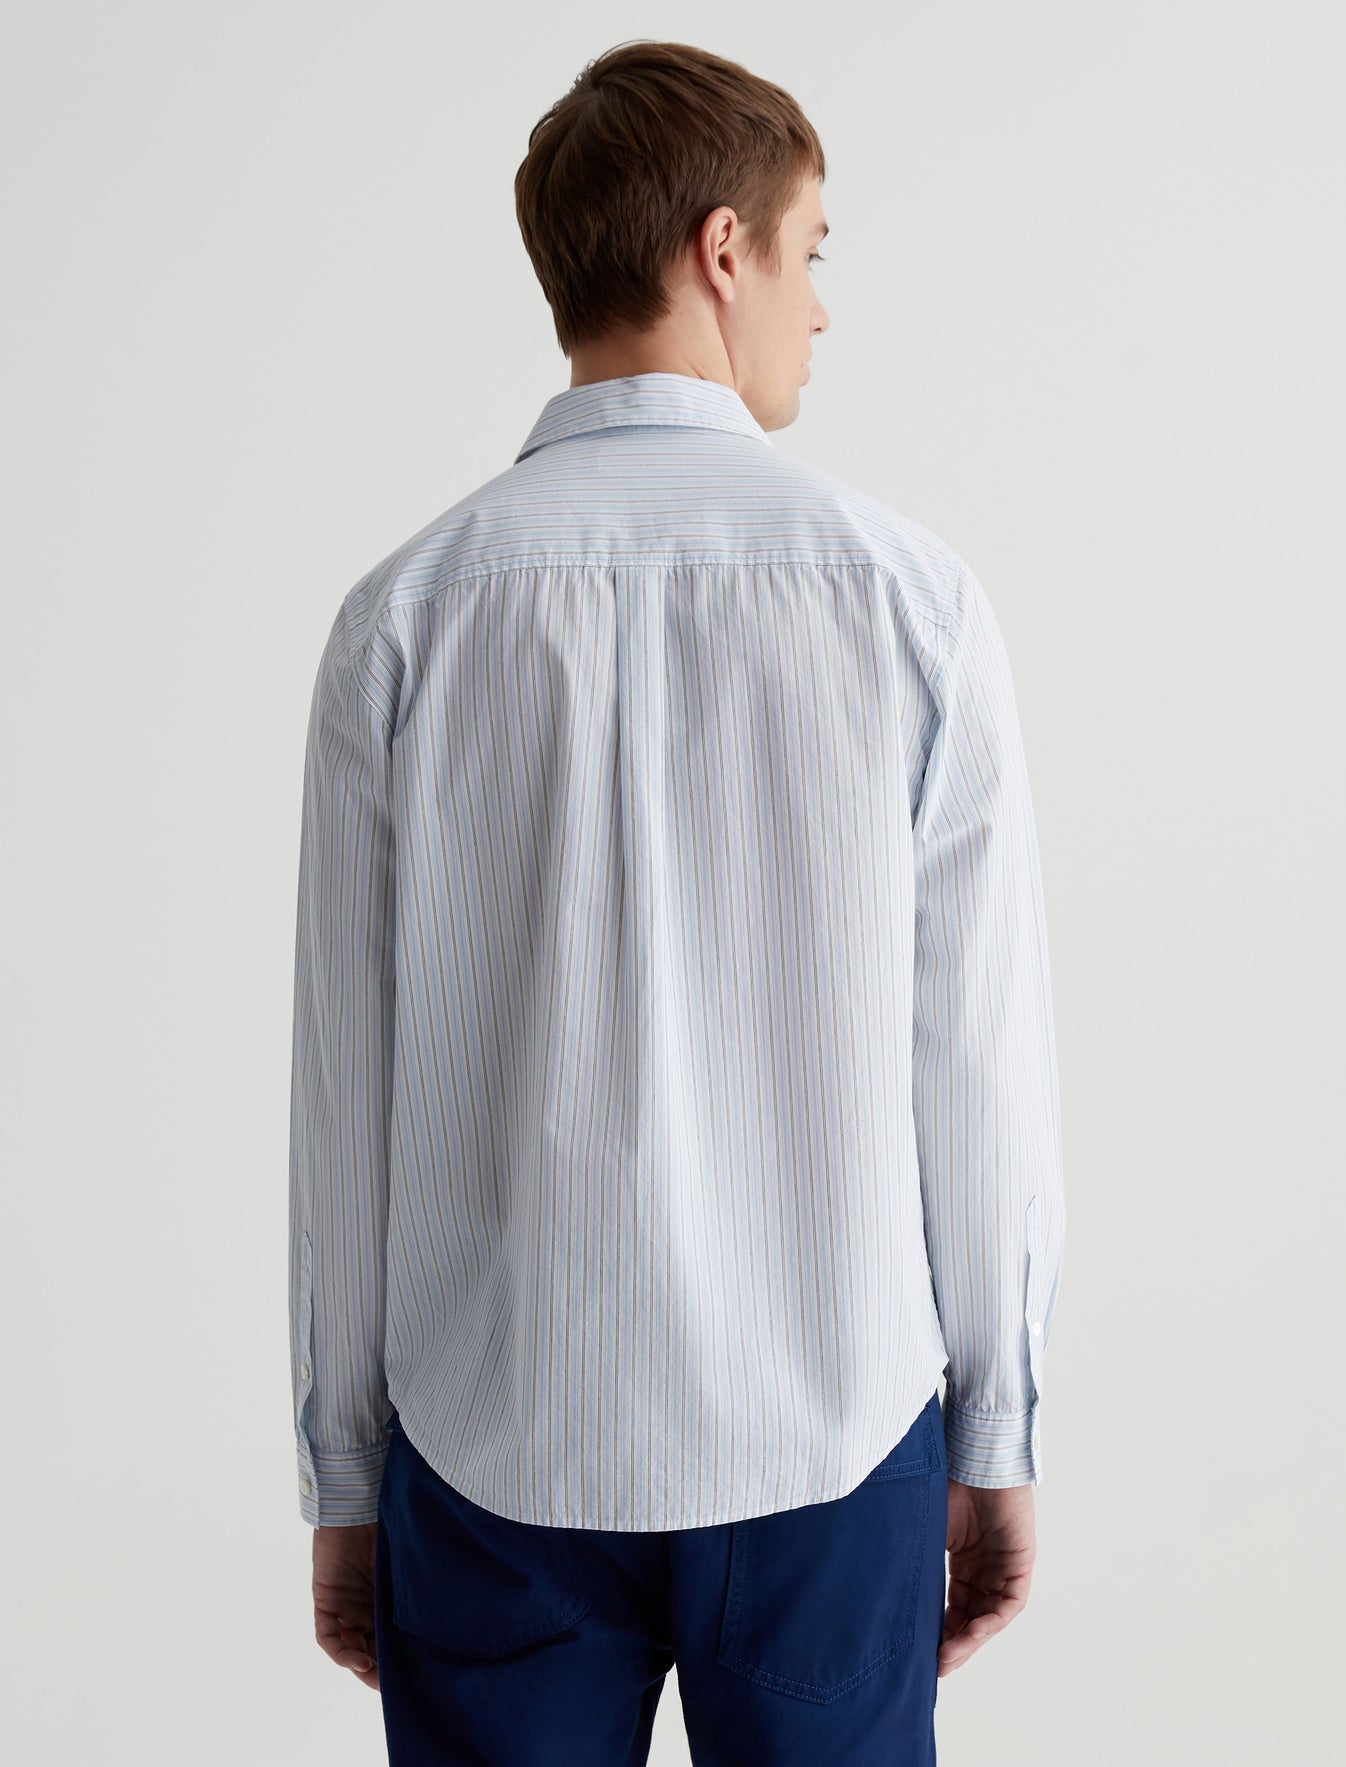 Aiden Shirt Gallery Stripe Blue Multi Classic Fit Long Sleeve Button-Up Shirt Men Top Photo 6